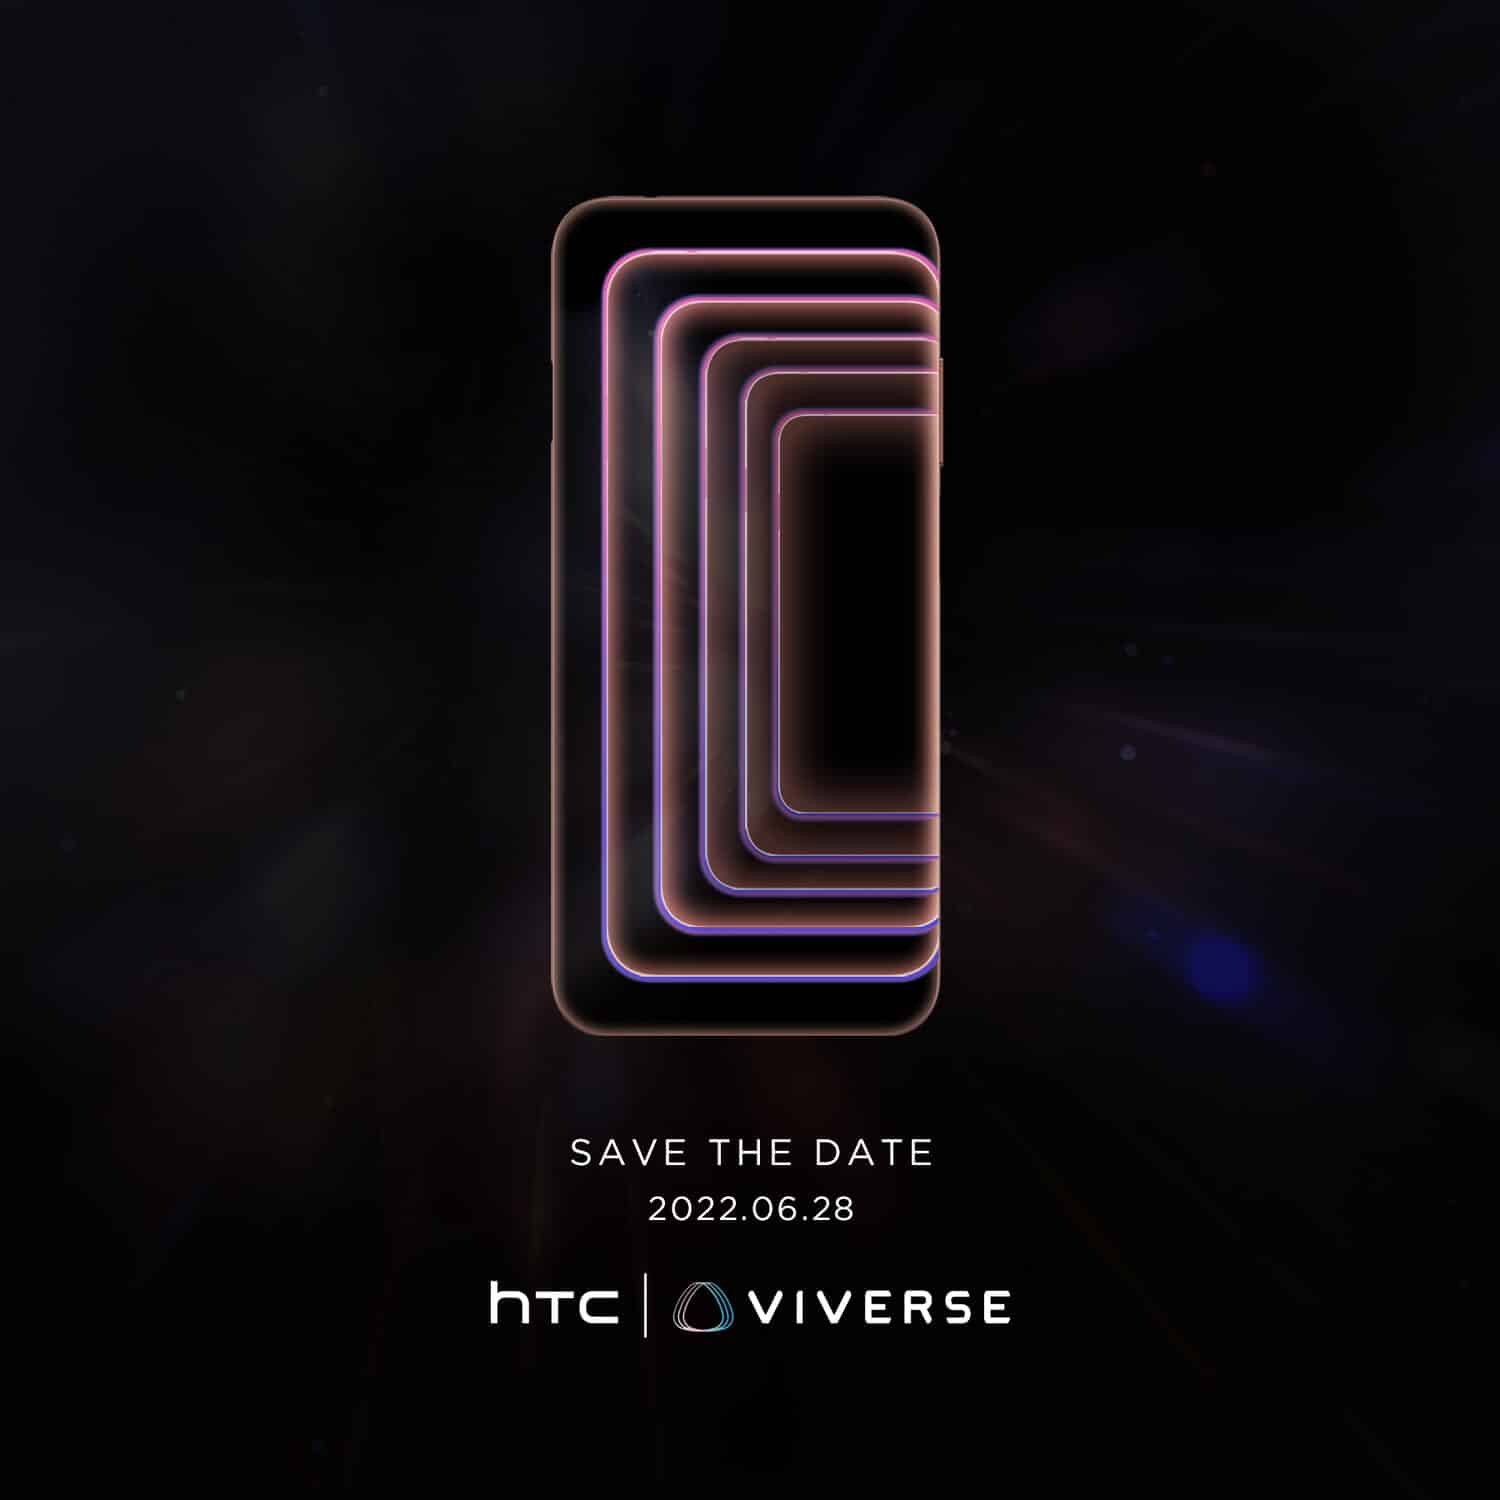 HTCがAR統合スマートフォンを発表？6月28日にイベント開催を予告